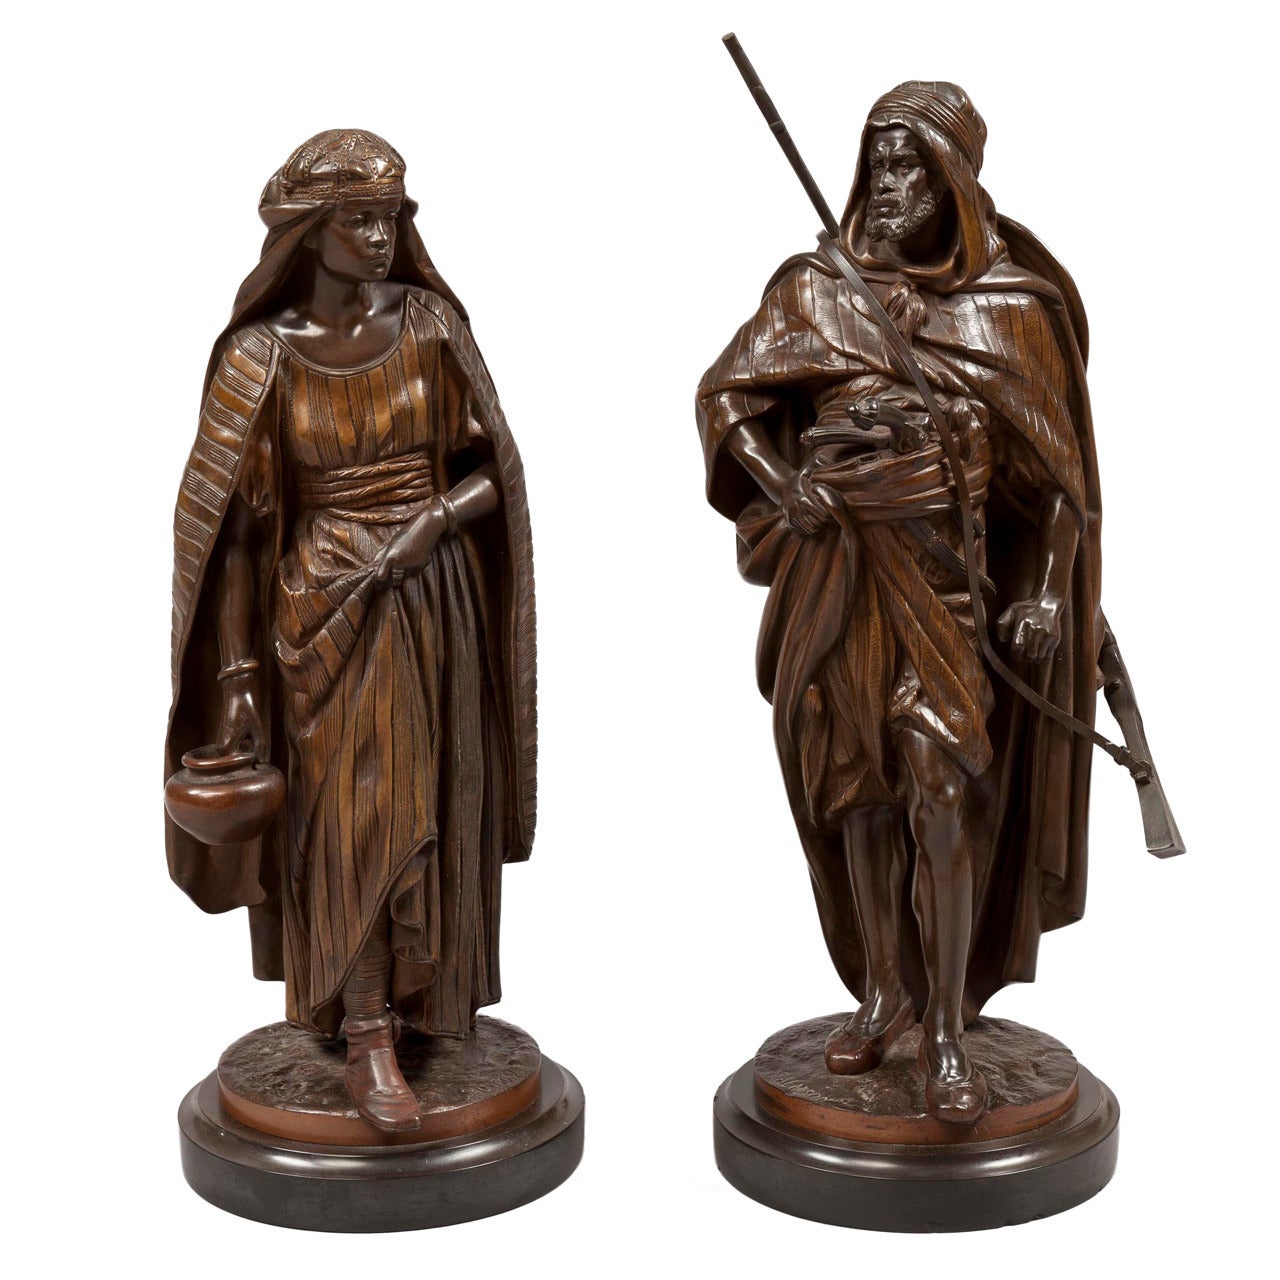 Pair of Figural Orientalist Bronzes by Jean Jules Salmson, 1823-1902